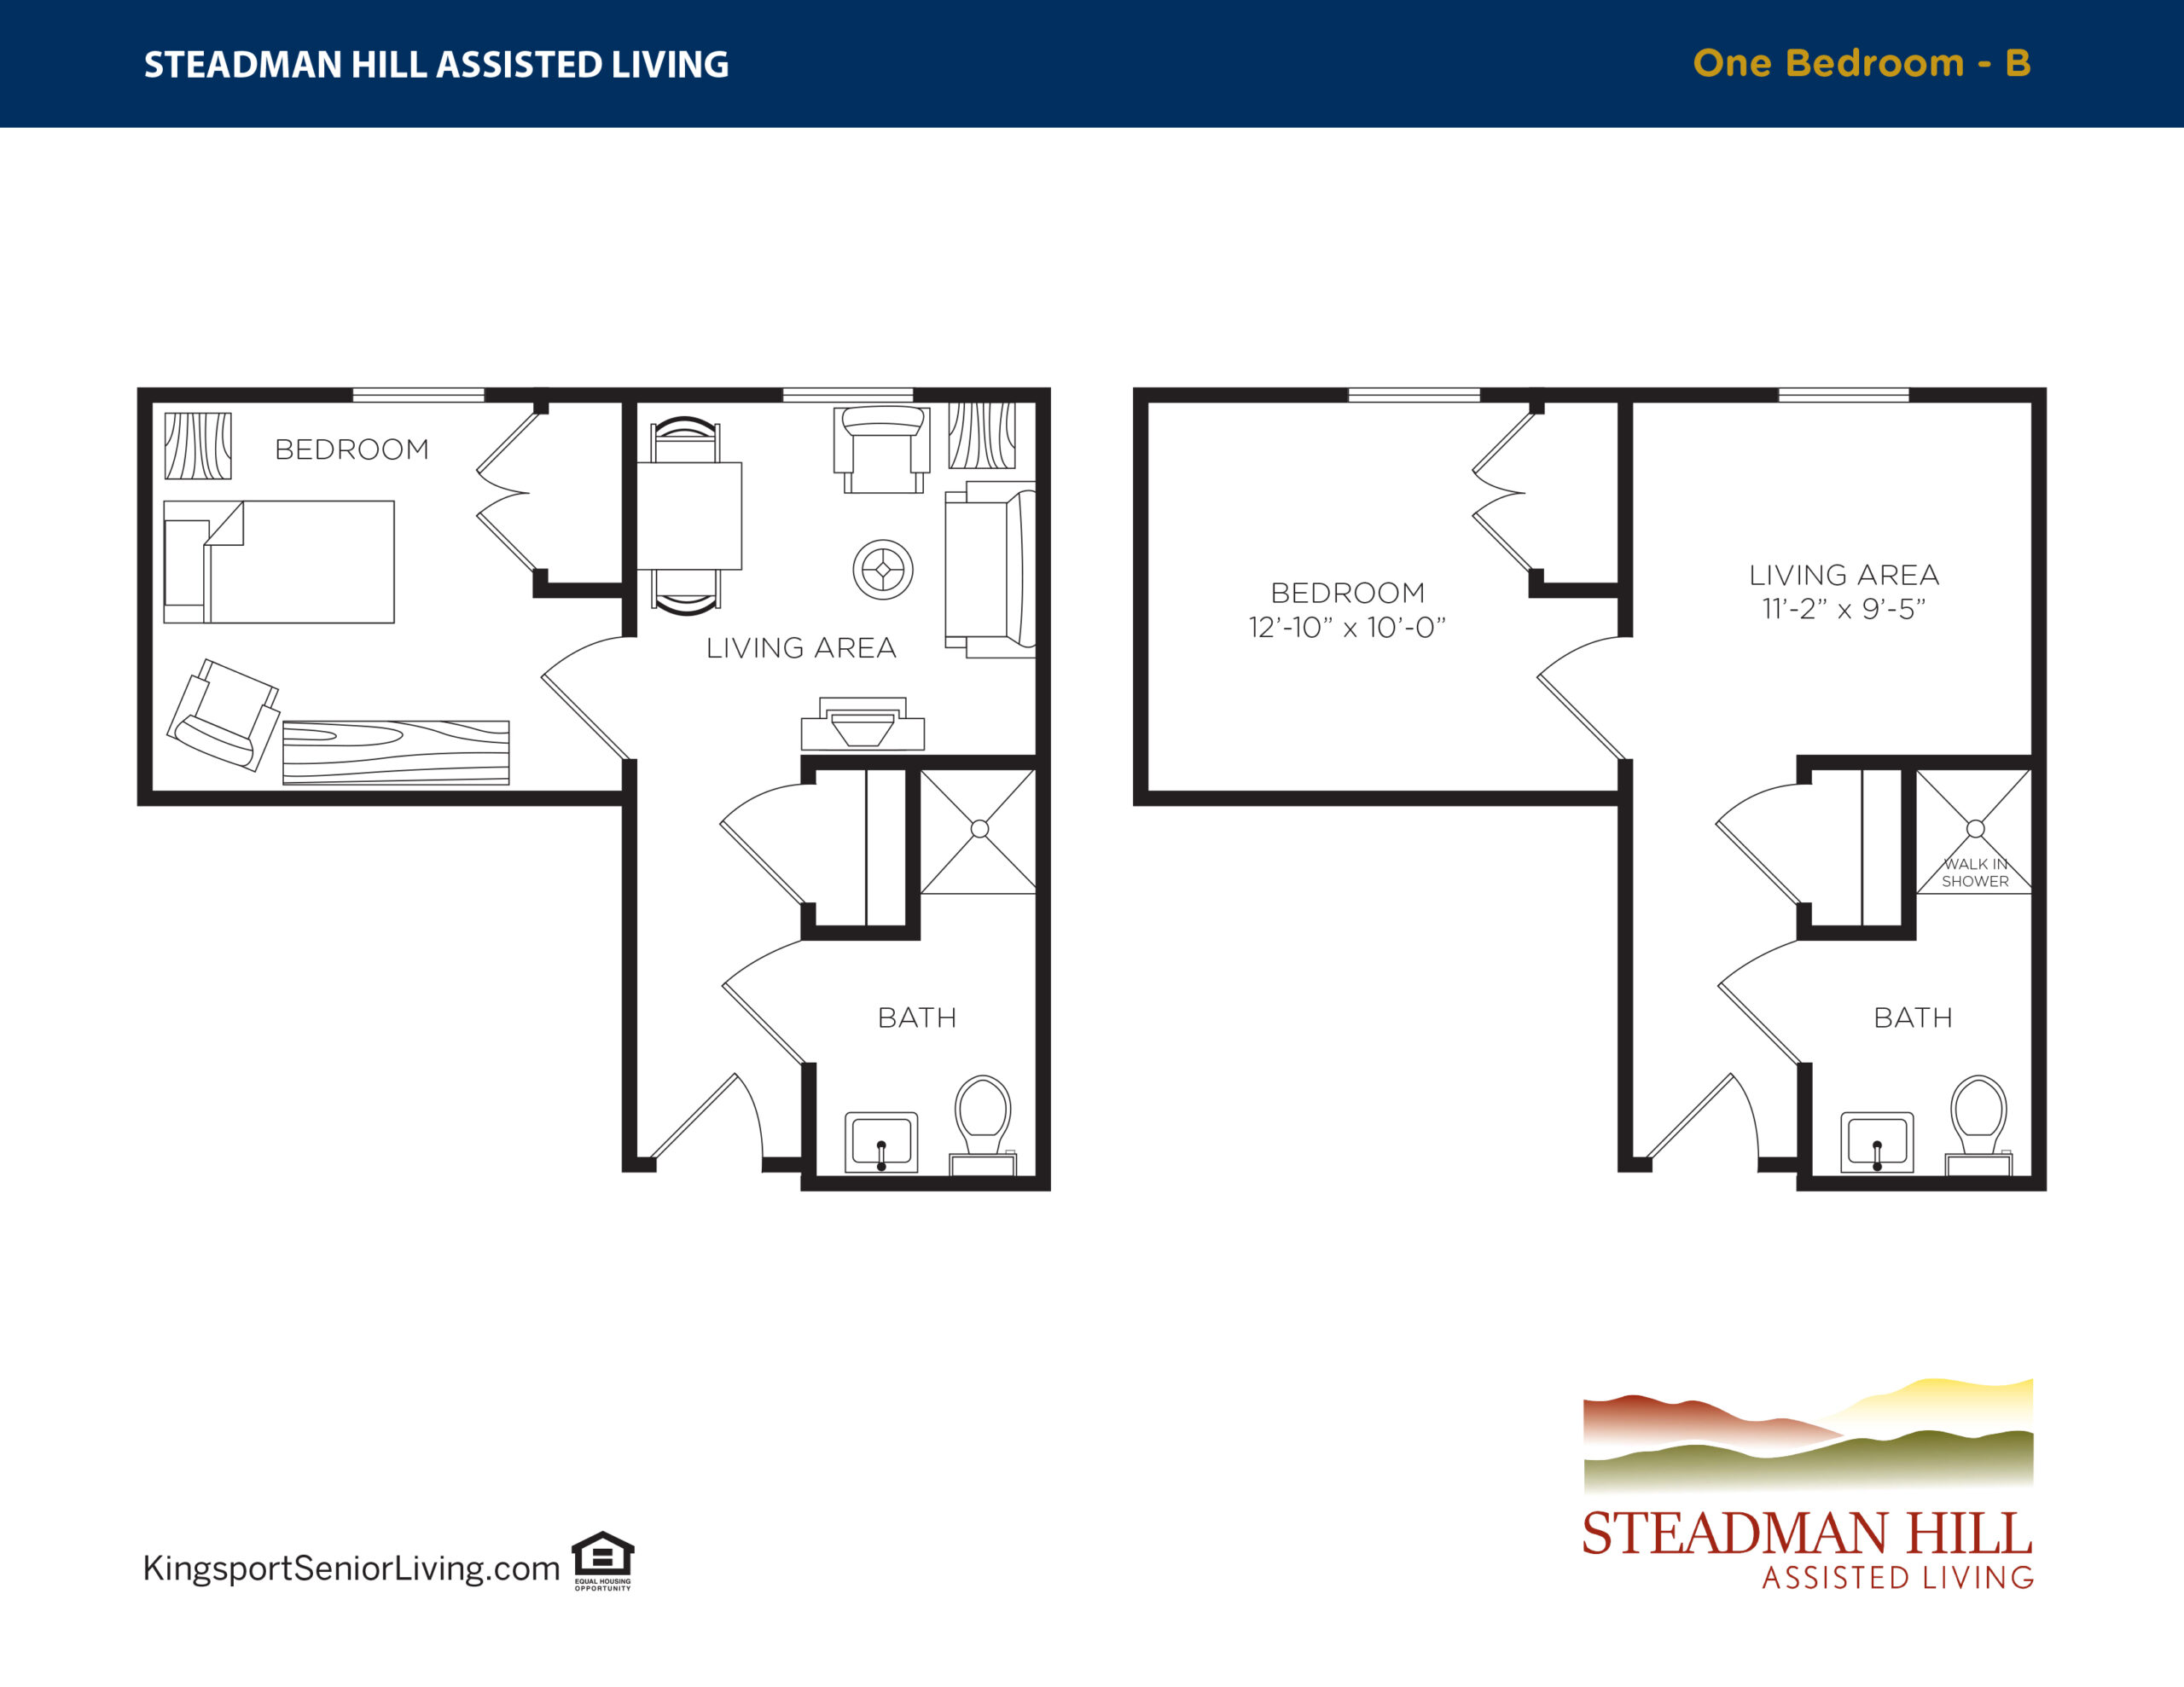 Steadman Hill Floorplan 1 Bedroom B